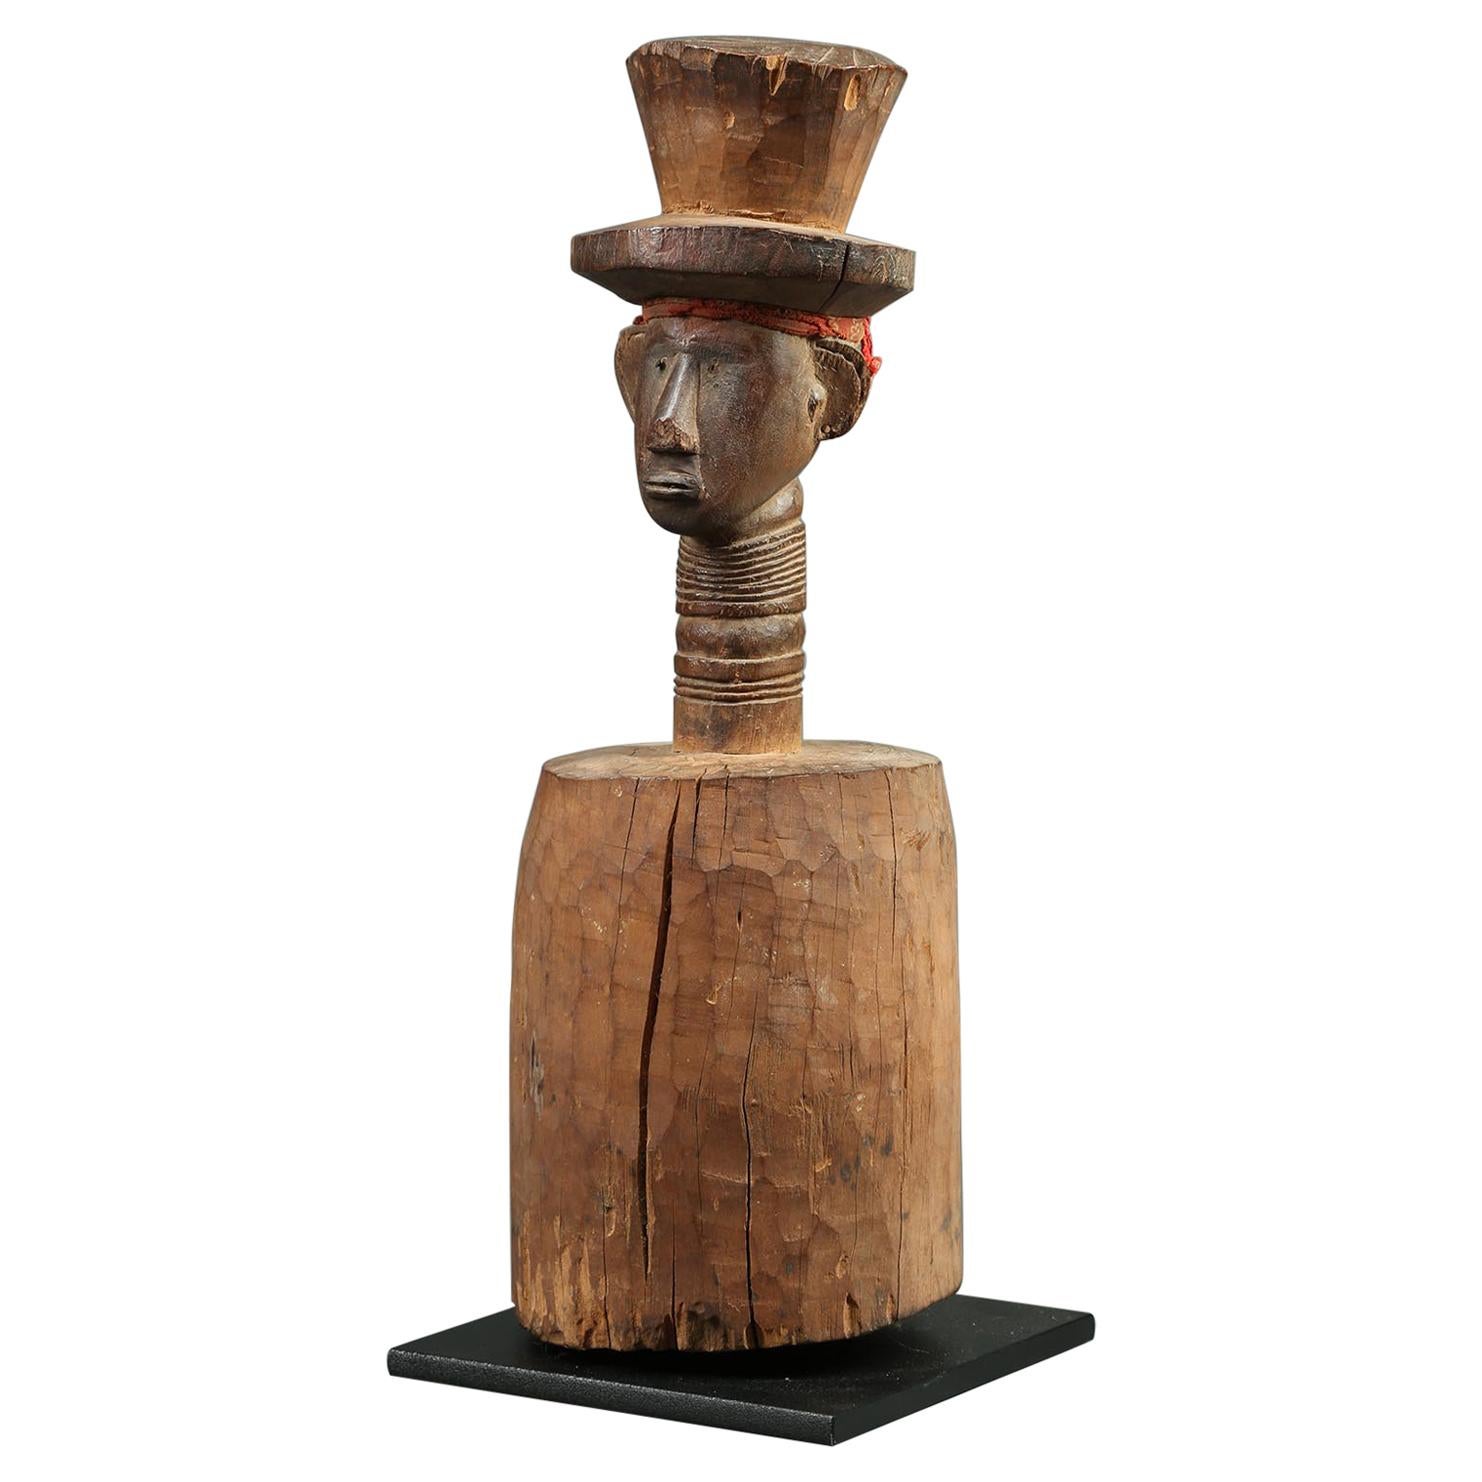 Bidjogo Tribal Altar Sculpture with Head, Guinea-Bissau, Africa